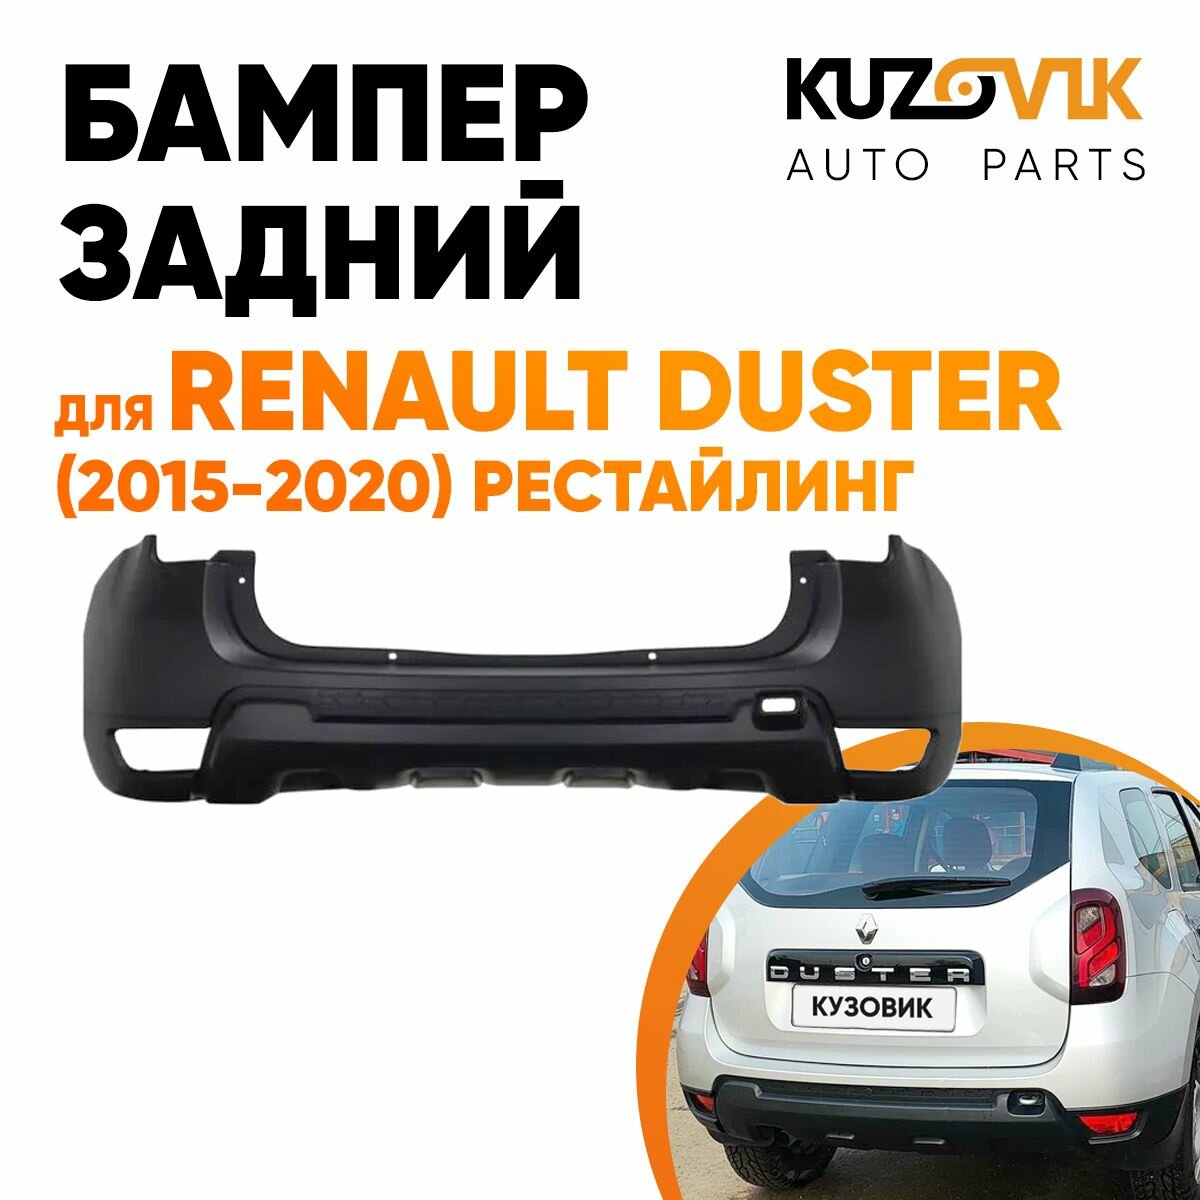 Бампер задний для Рено Дастер Renault Duster (2015-2020) рестайлинг